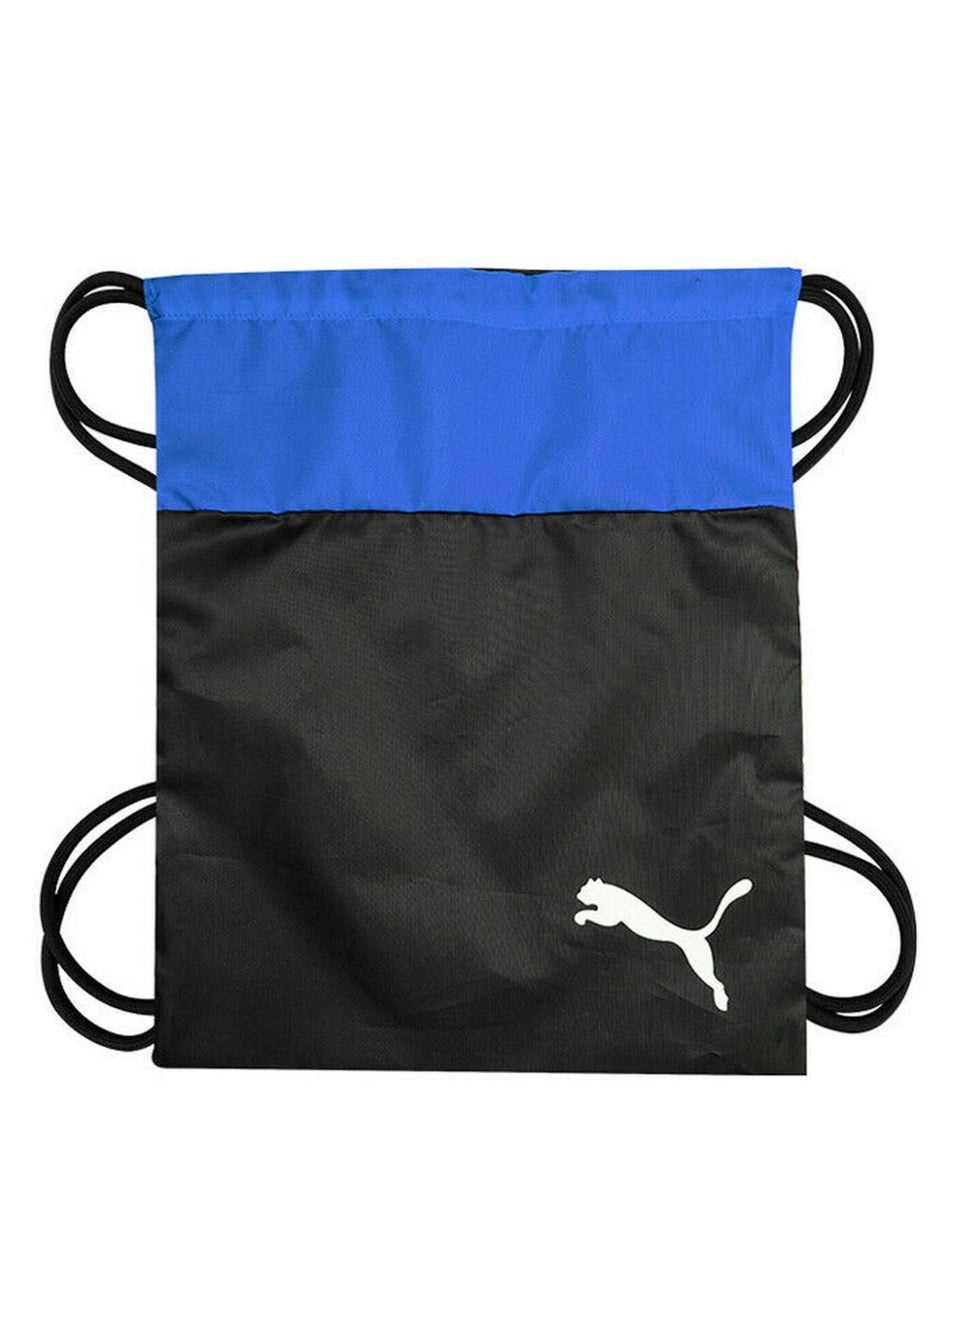 Puma Black/Blue Team Goal 23 Drawstring Bag